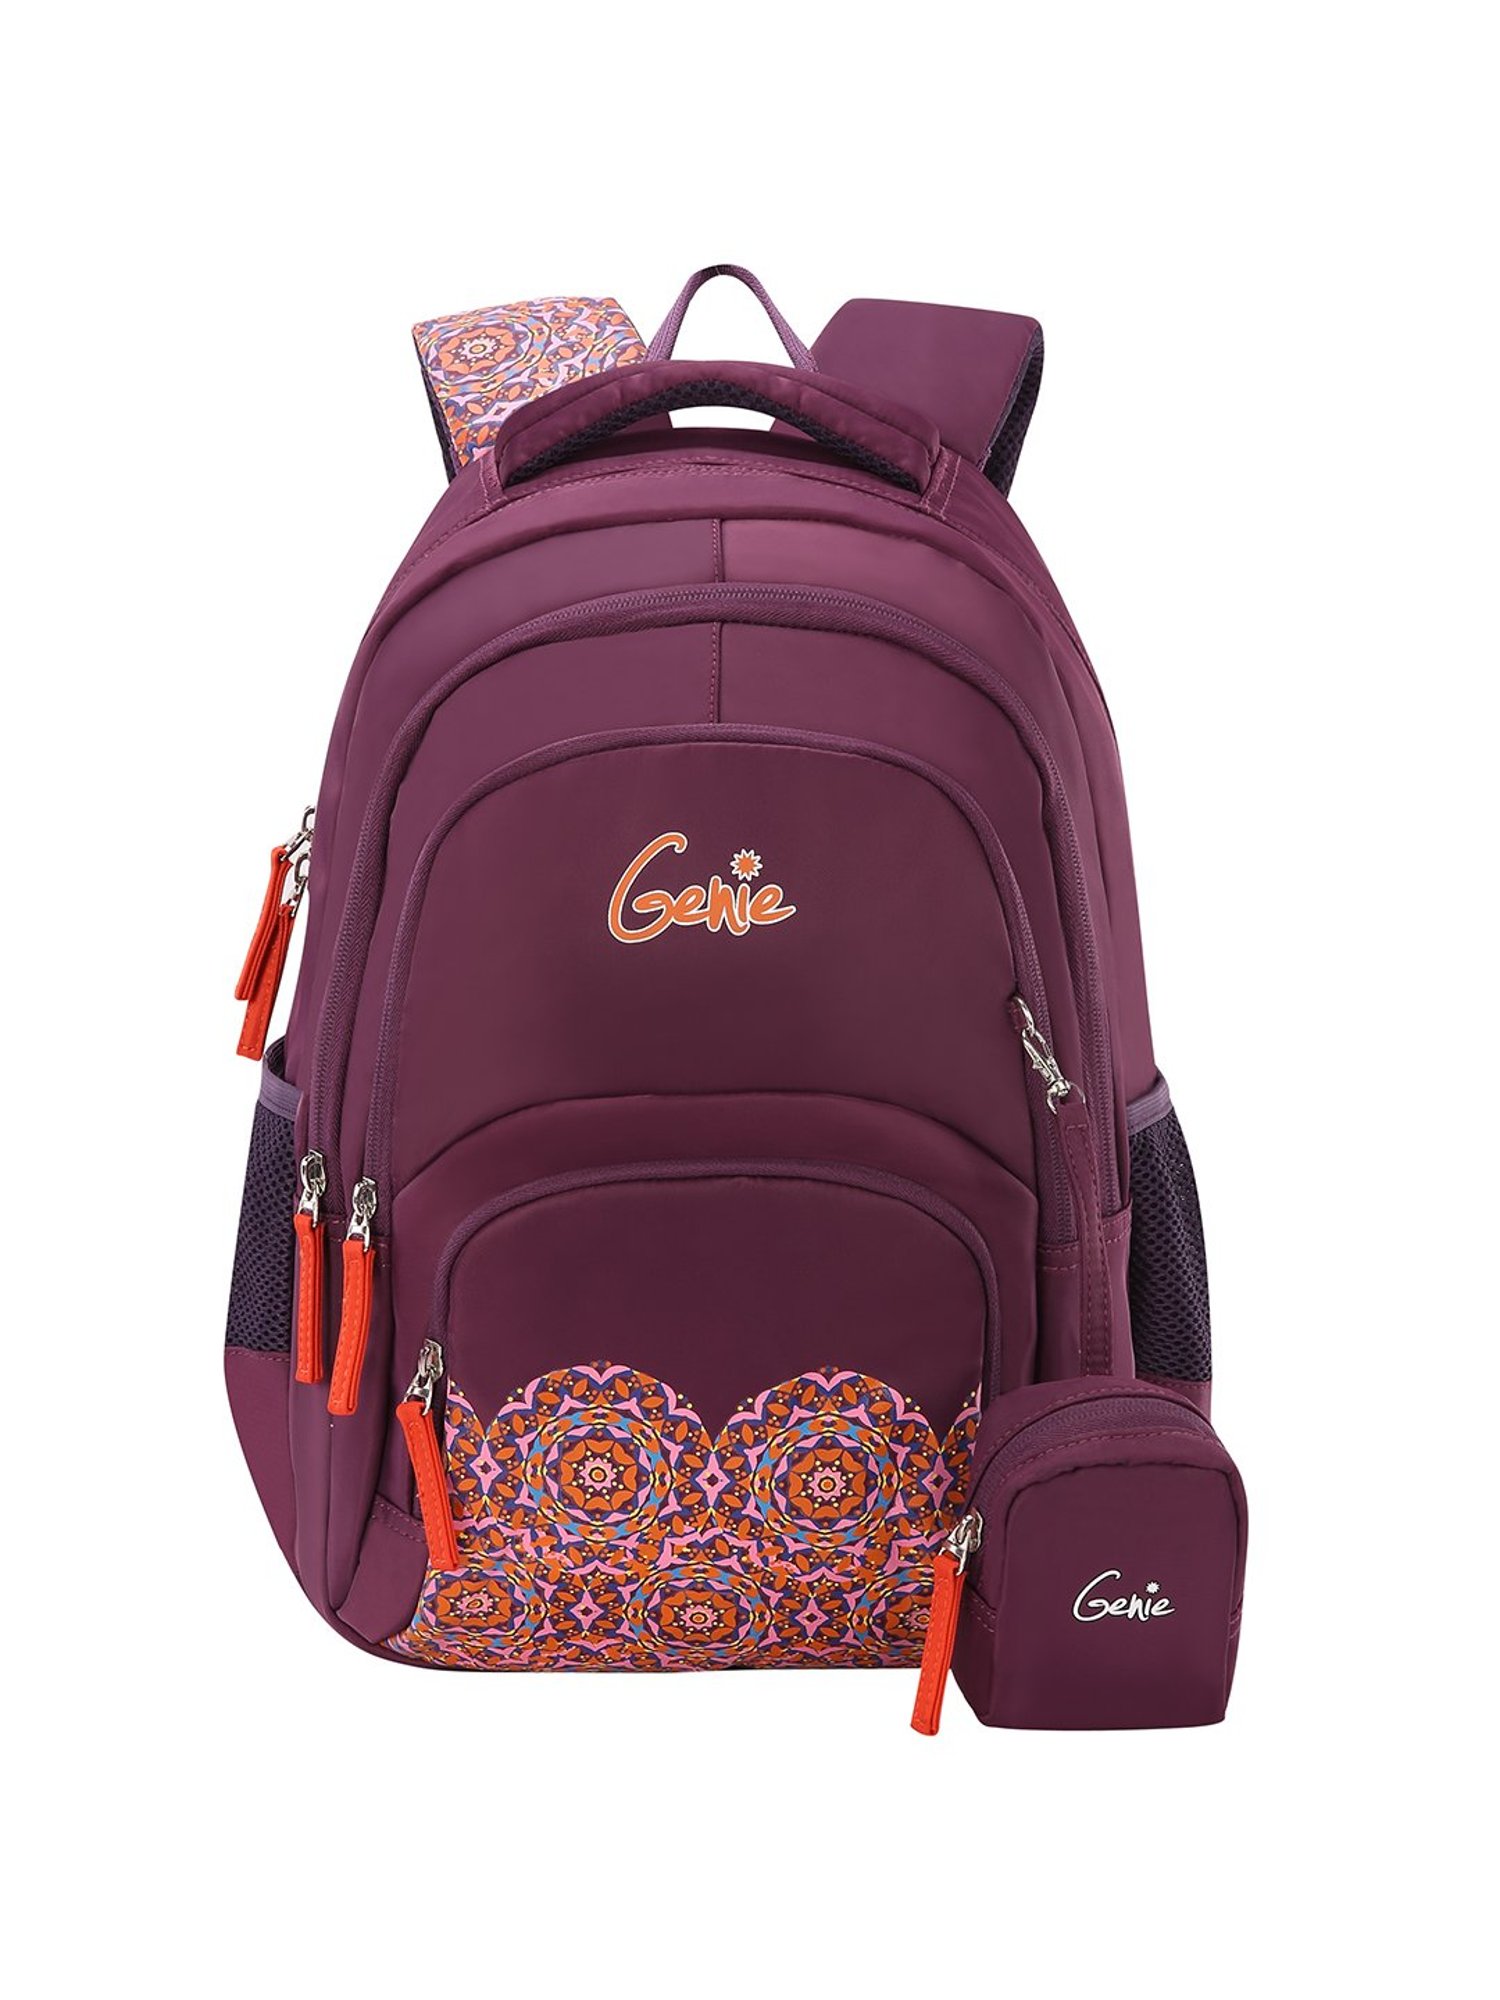 Luv BETSEY JOHNSON Purse Dakota Small Backpack Bag Mauve Purple Floral  LBDAKOTA | eBay